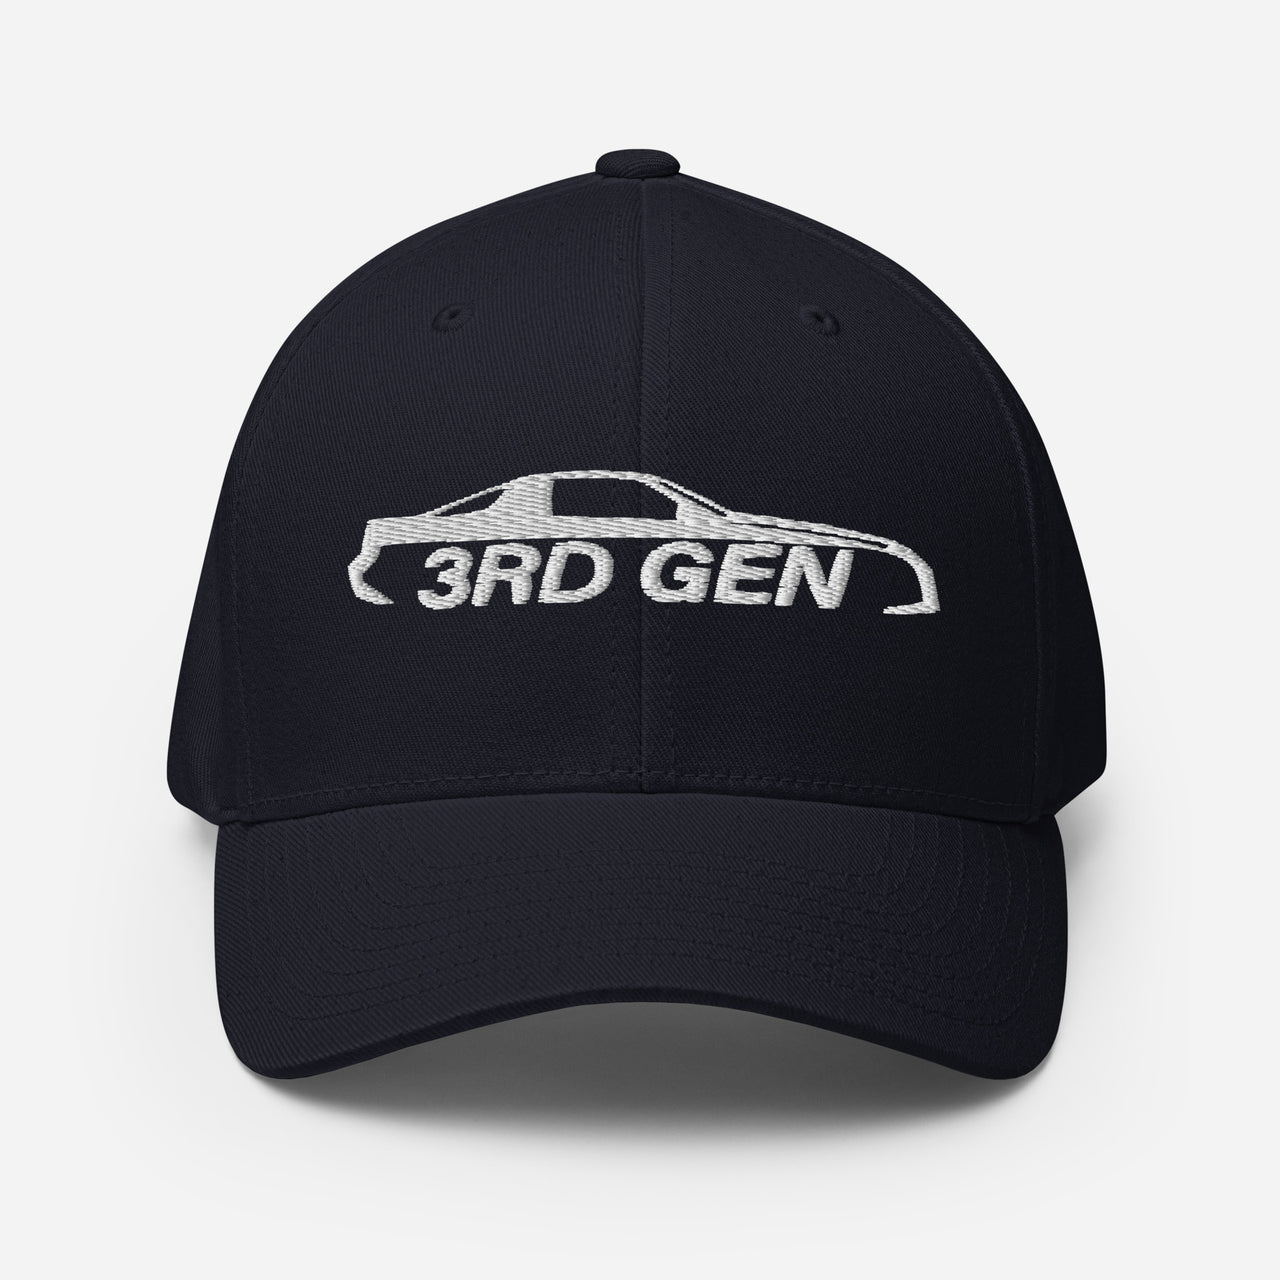 Third Gen Camaro Hat Flexfit Cap in navy